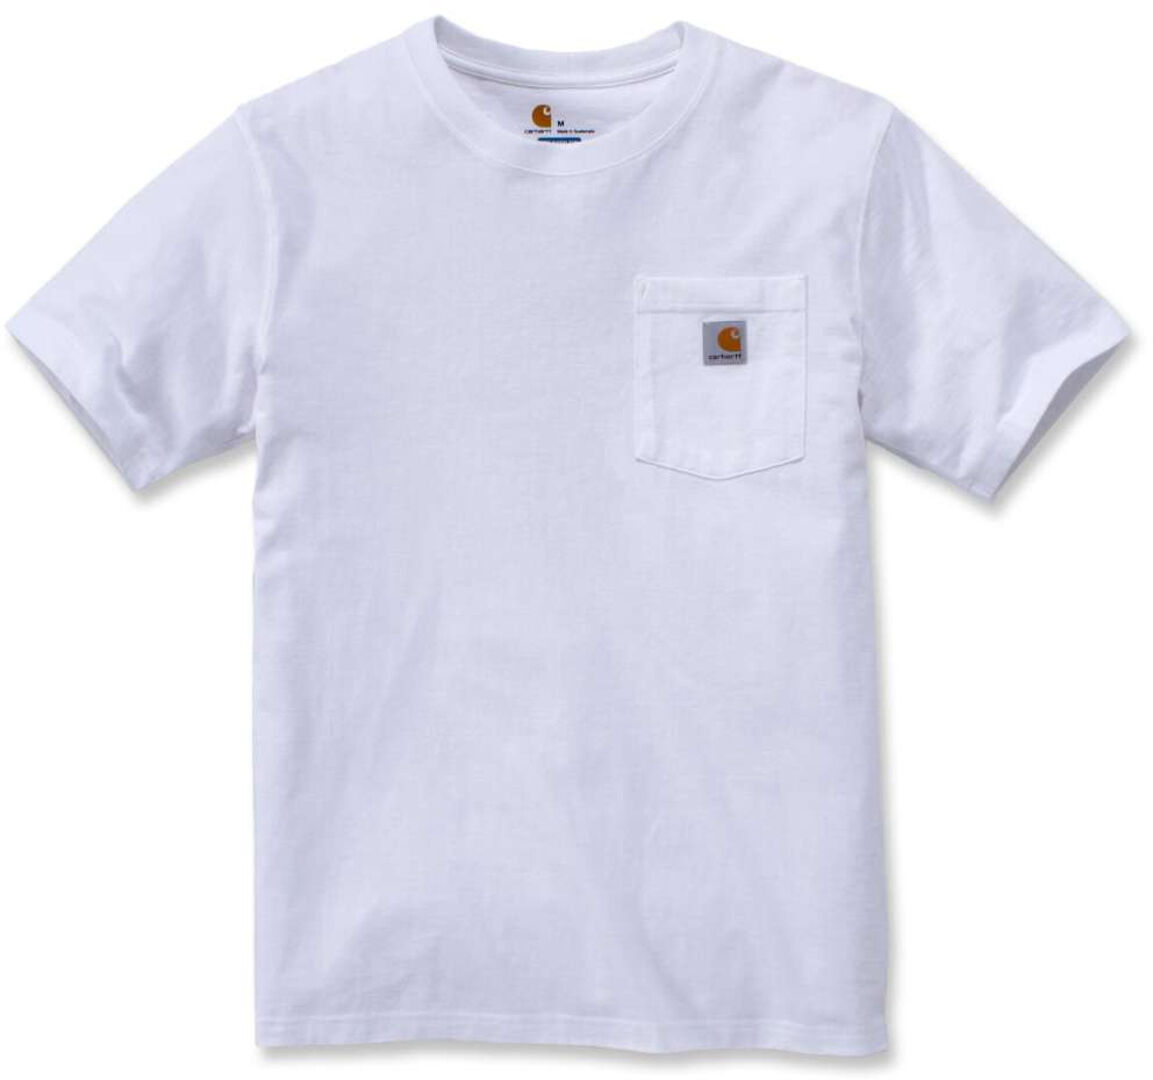 Carhartt Workwear Pocket Camiseta - Blanco (S)